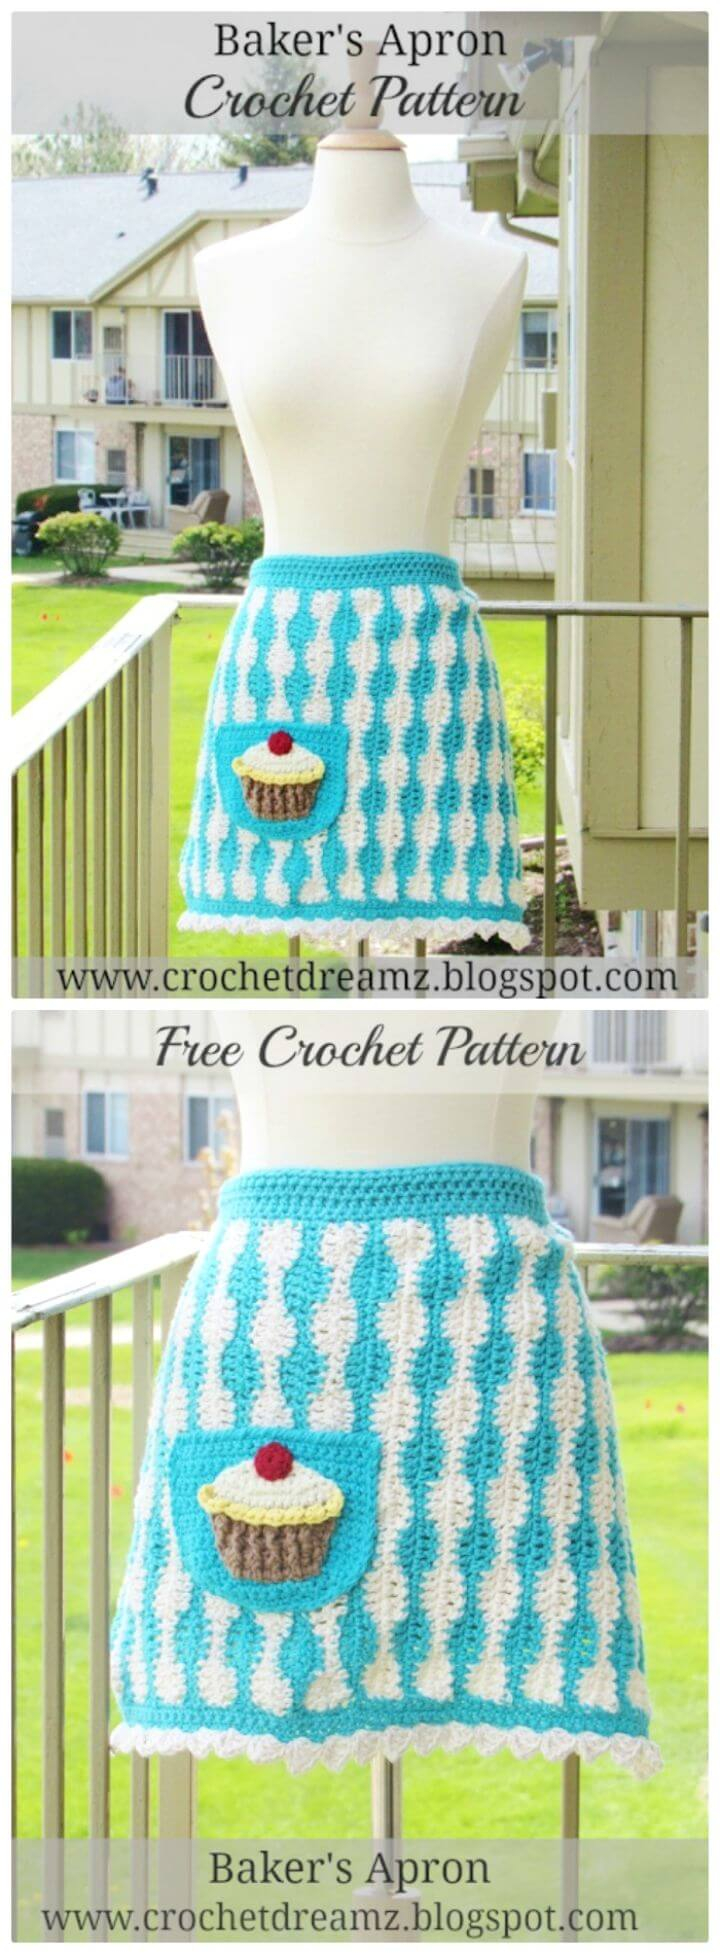 Crochet Apron Pattern Free 32 Free Crochet Apron Patterns Crochet Apron For Eggs Diy Crafts